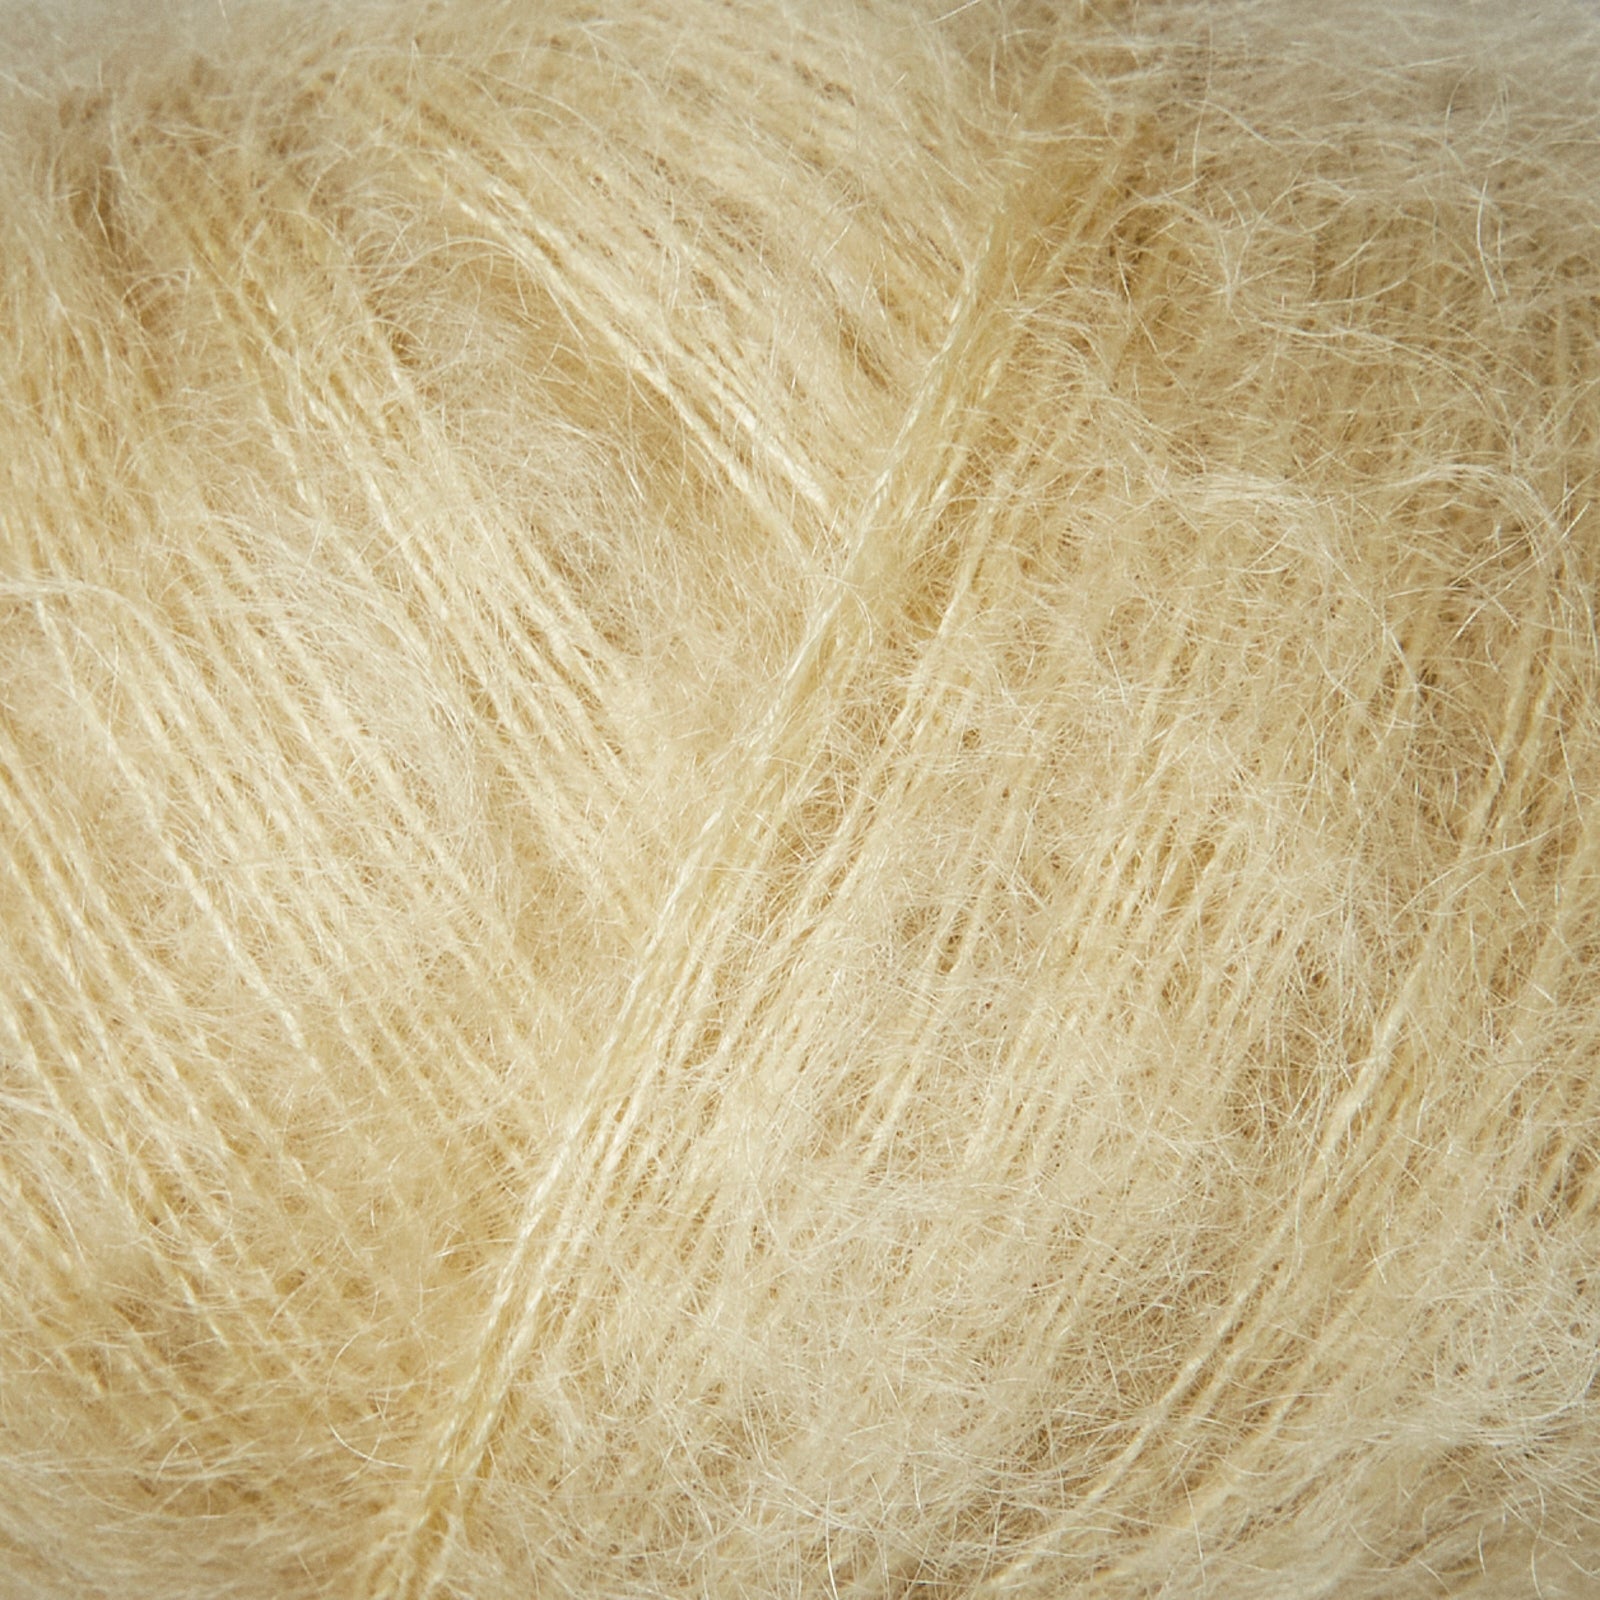 Knitting for Olive Soft Silk Mohair - Dusty Banana